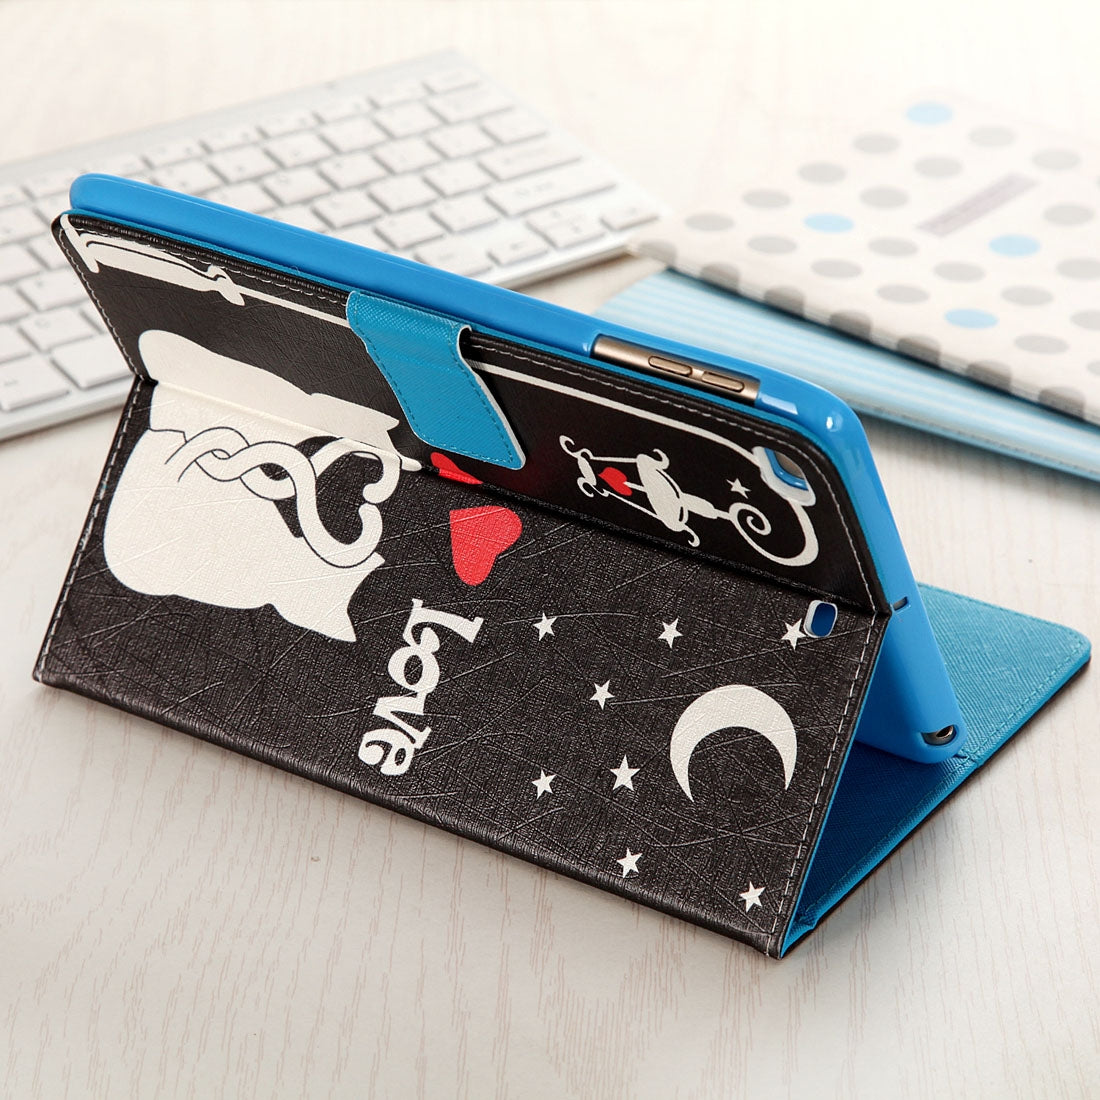 For iPad mini 4 / mini 3 / mini 2 / mini Love Cats Pattern Universal Horizontal Flip Leather Case with Holder & Card Slots & Wallet